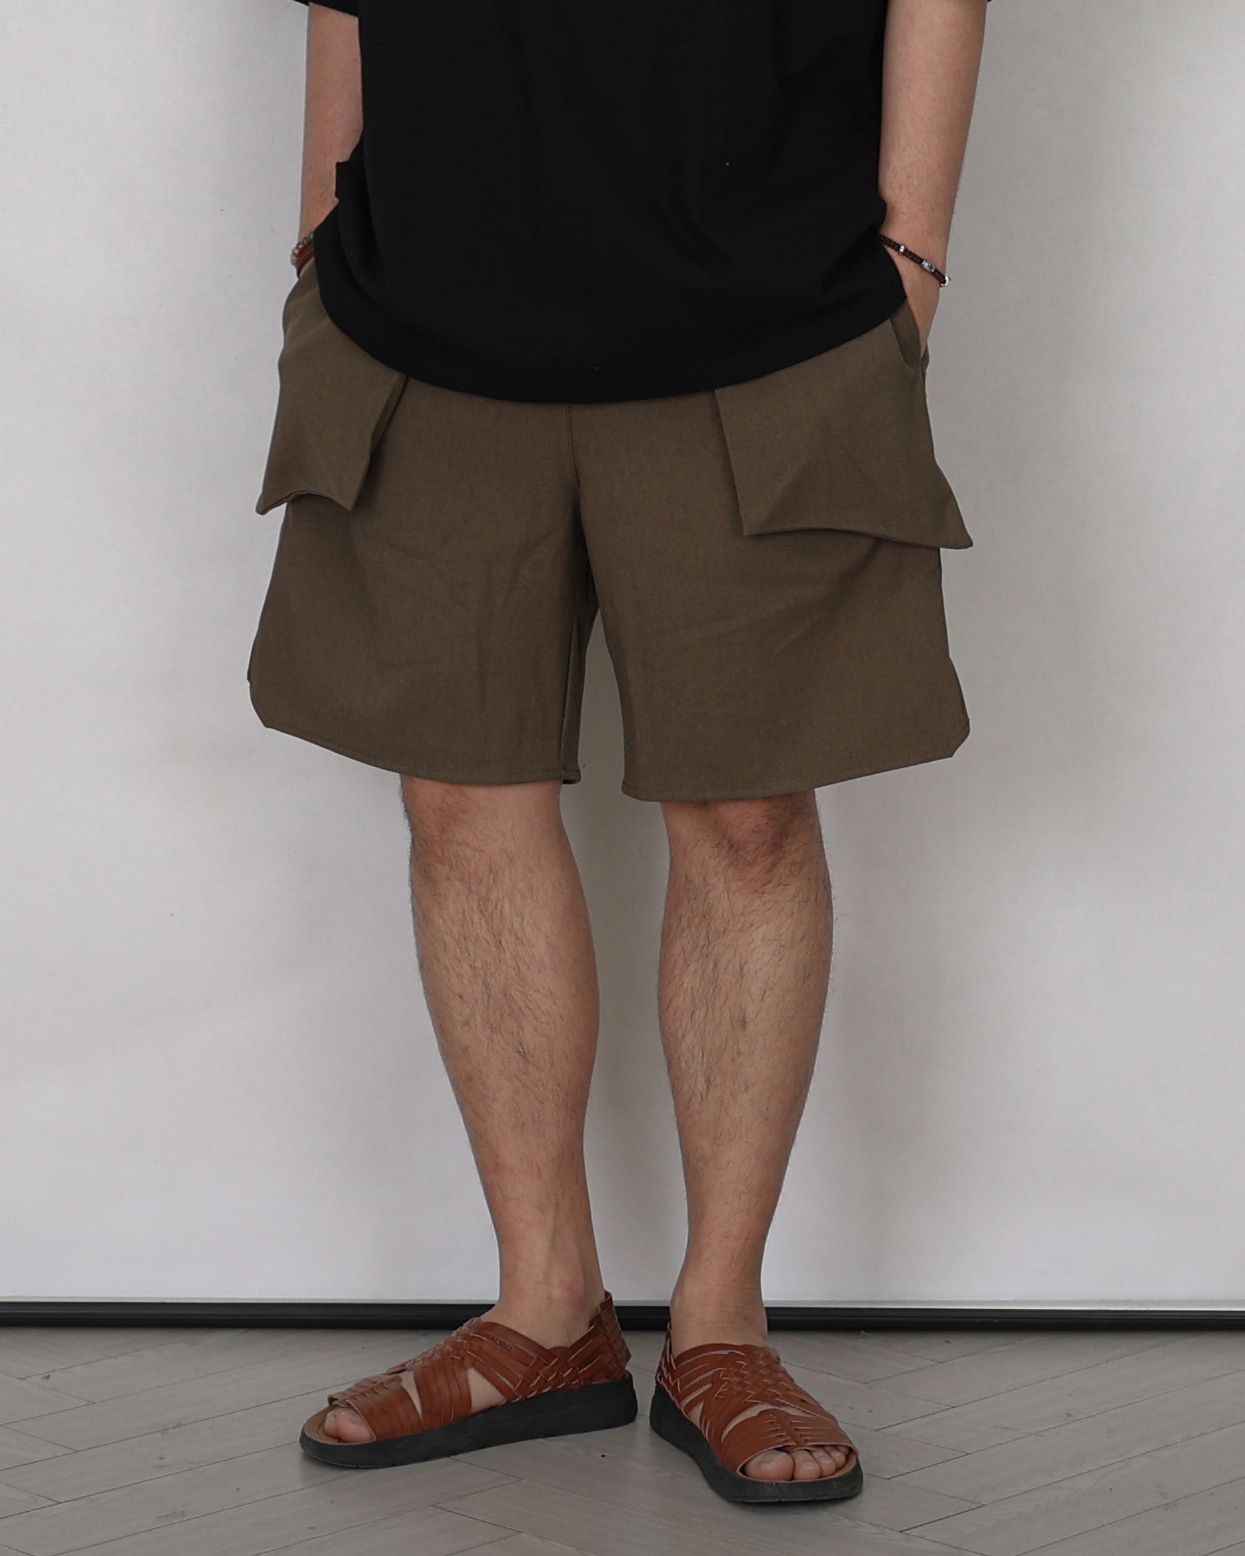 VAN Belted Out Fatigue Short Pants (Black/Brown)